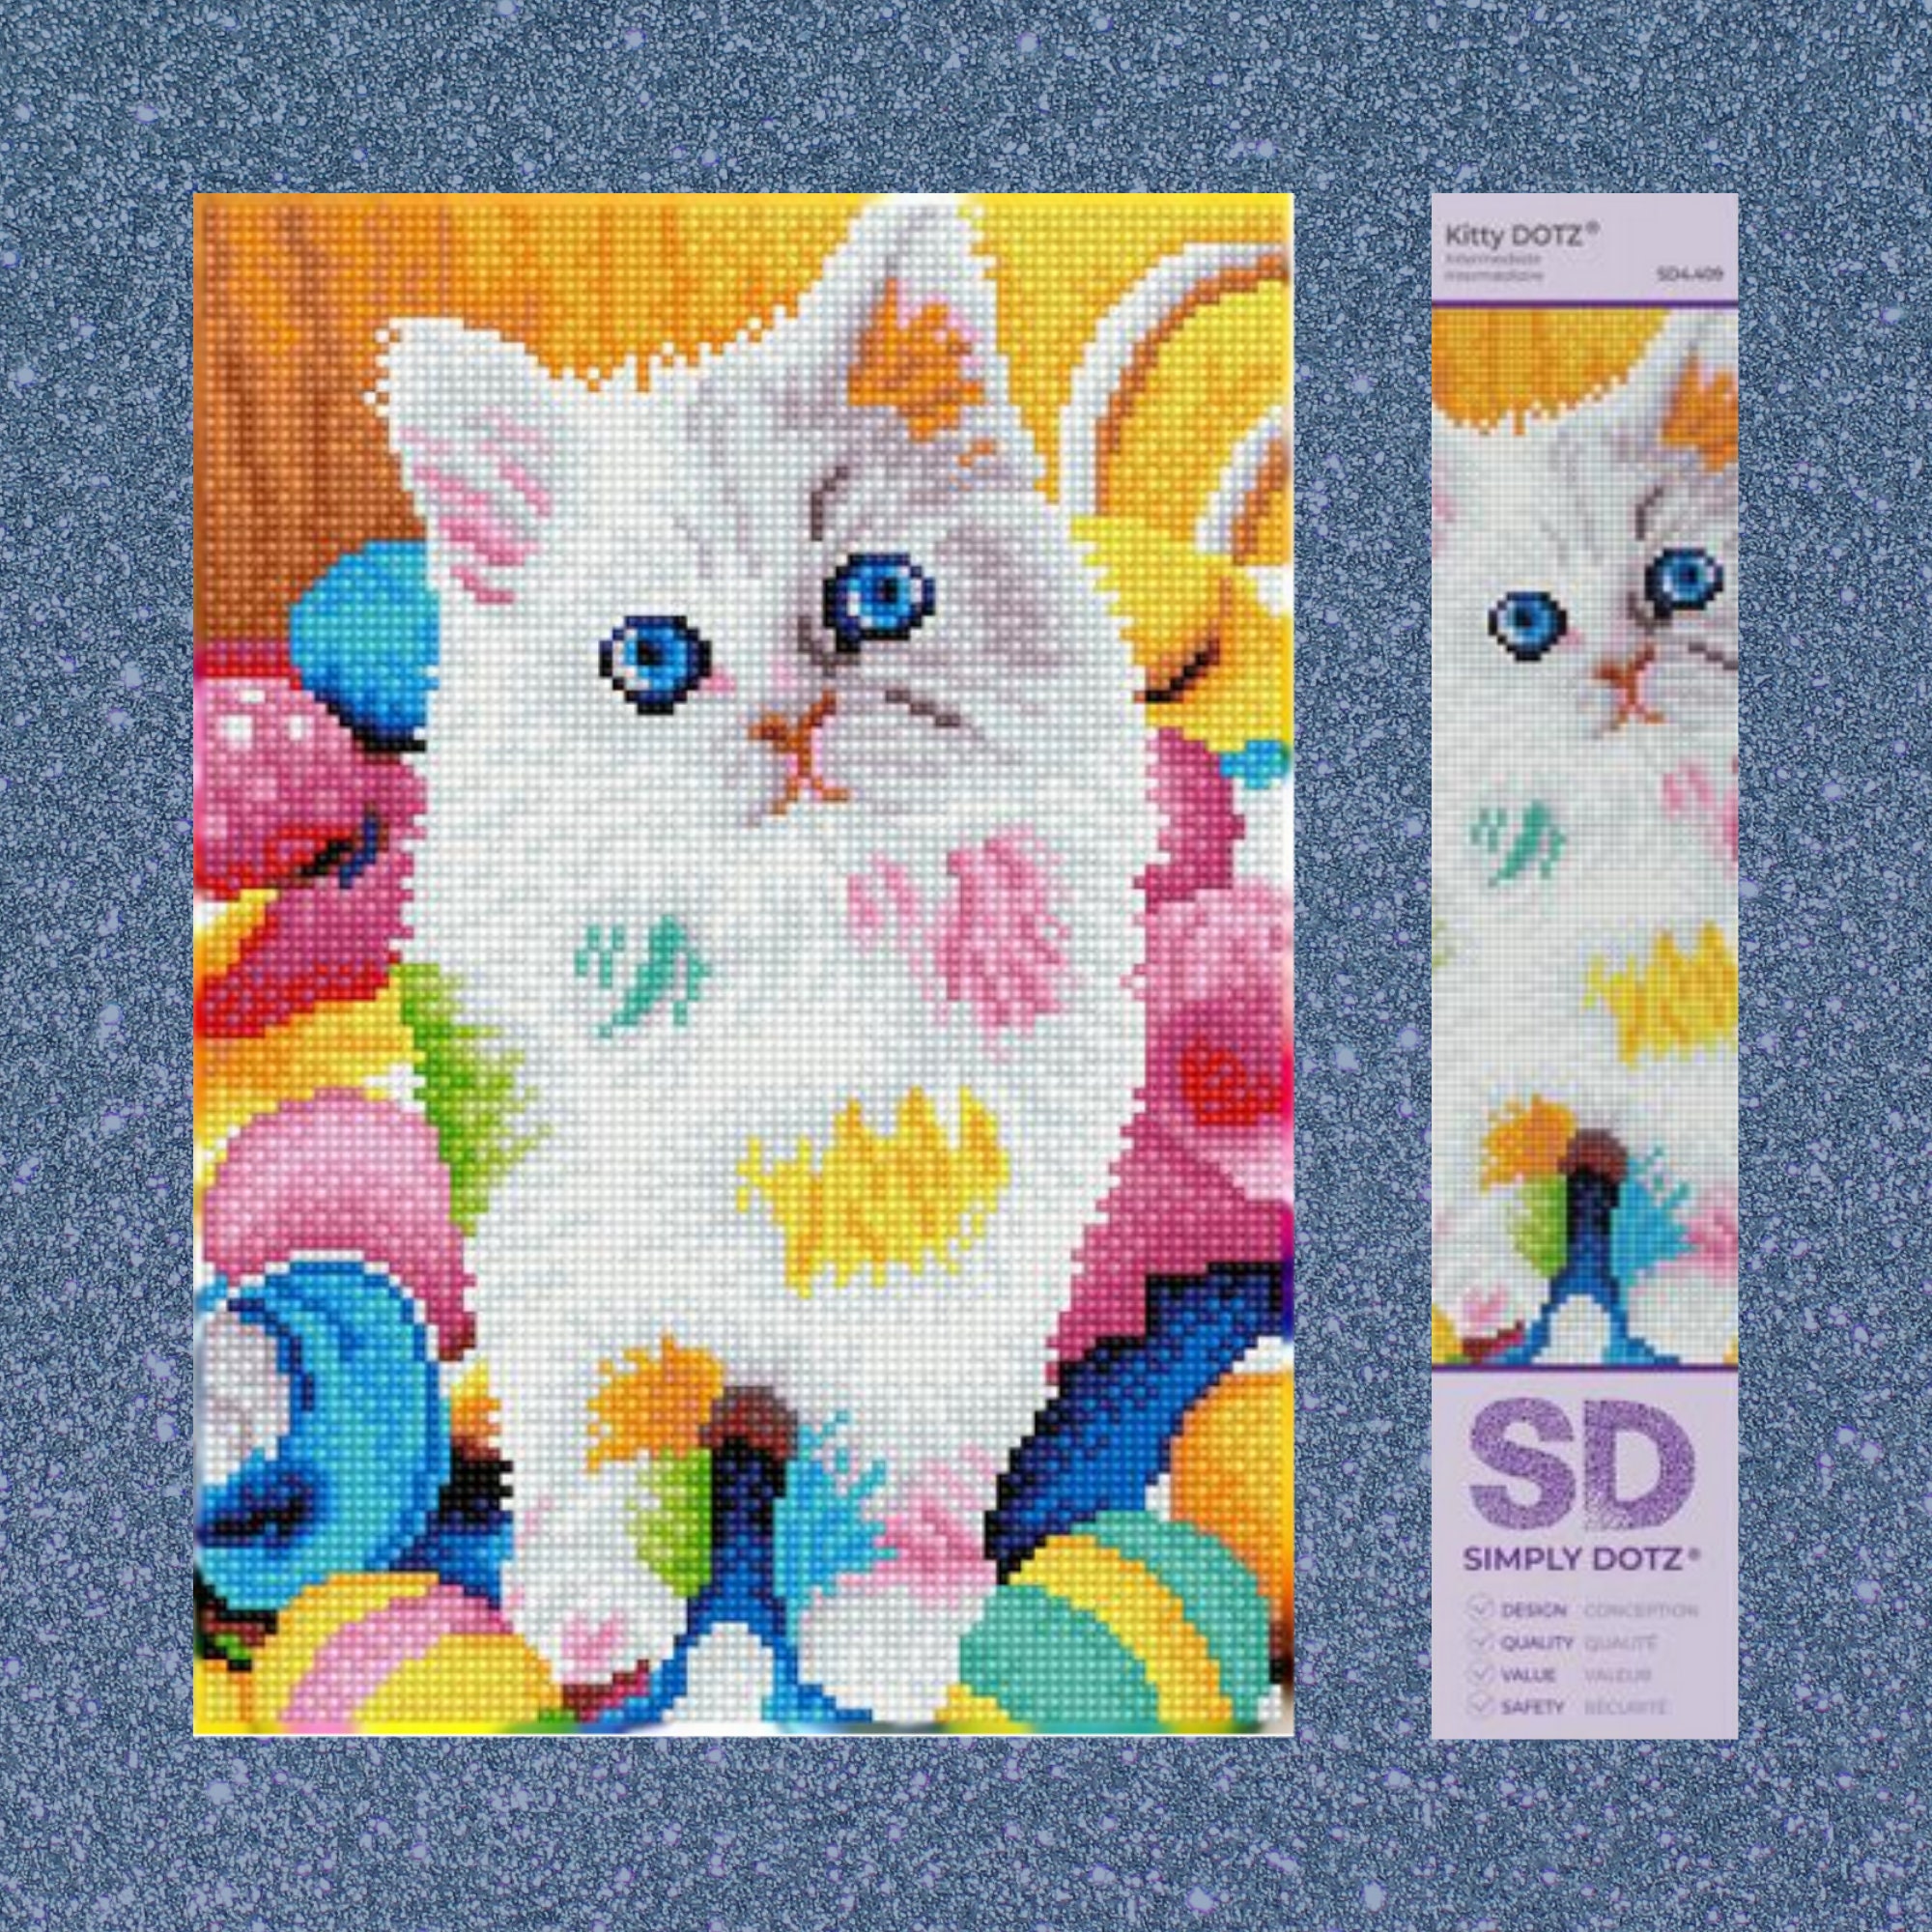 DIY Cat Diamond Art Kit 2018 Squirrel Cat 5D Square Mosaic Cross